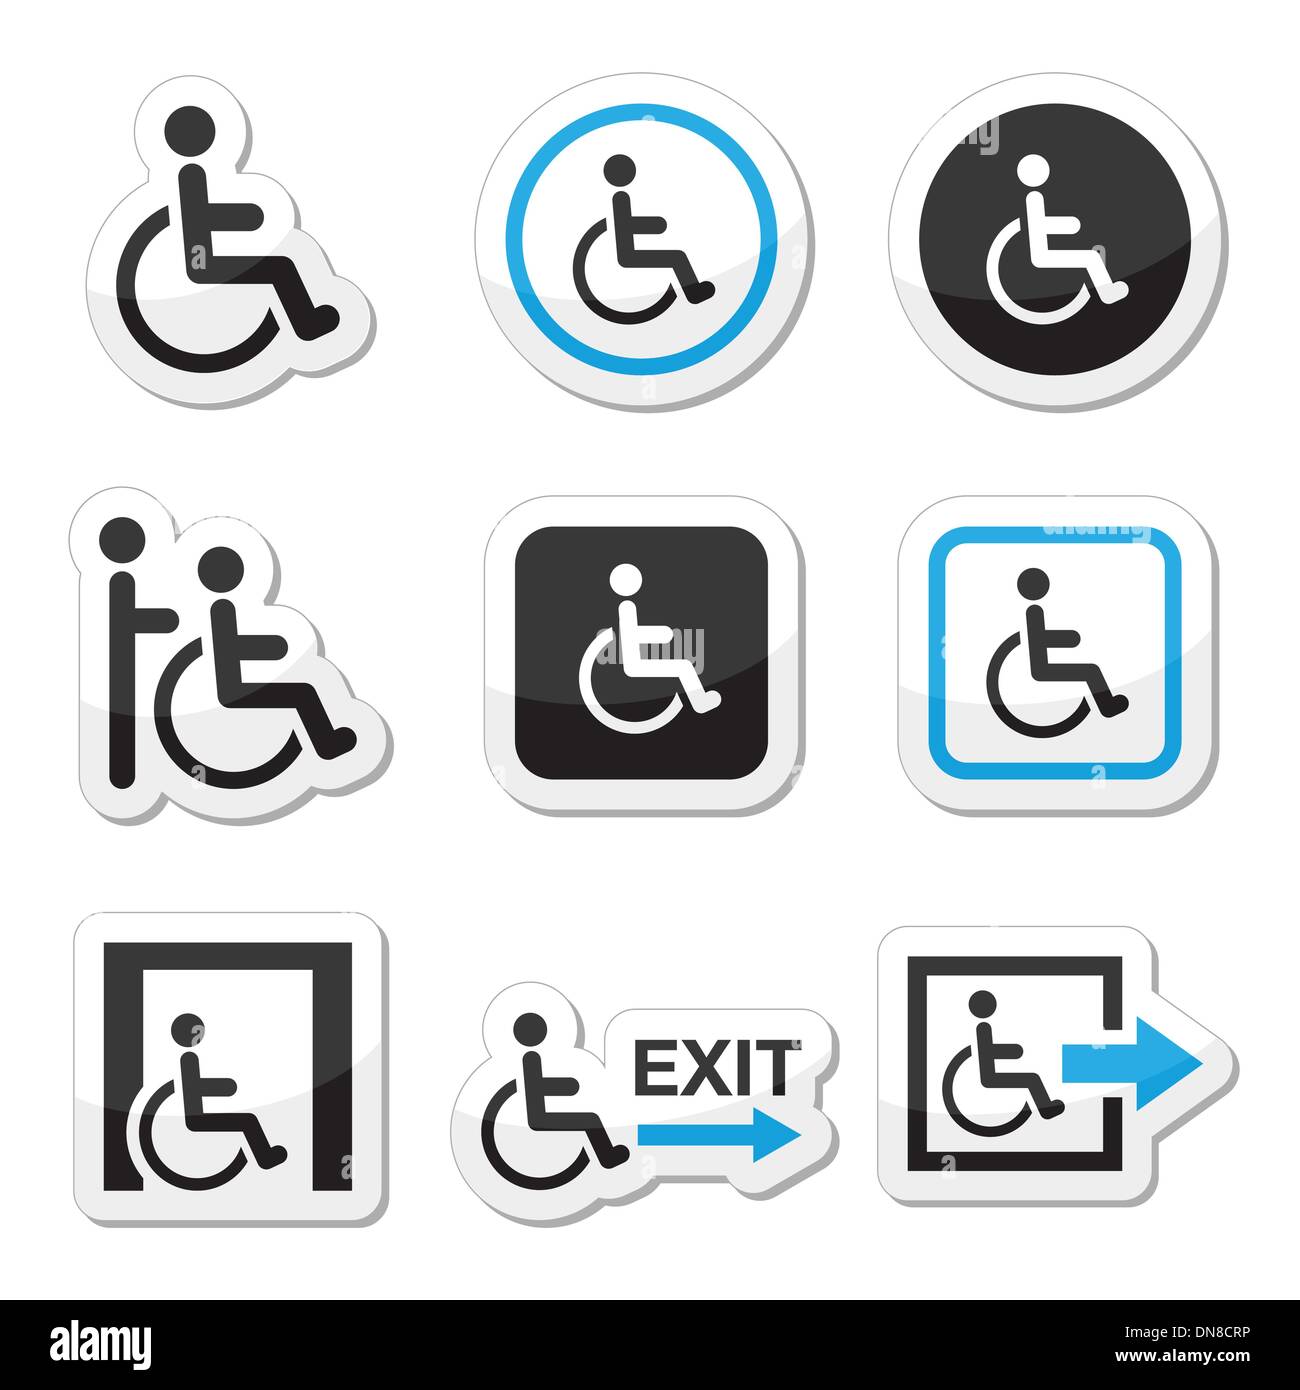 Mann im Rollstuhl, Behinderte, Notausgang Icons set Stock Vektor